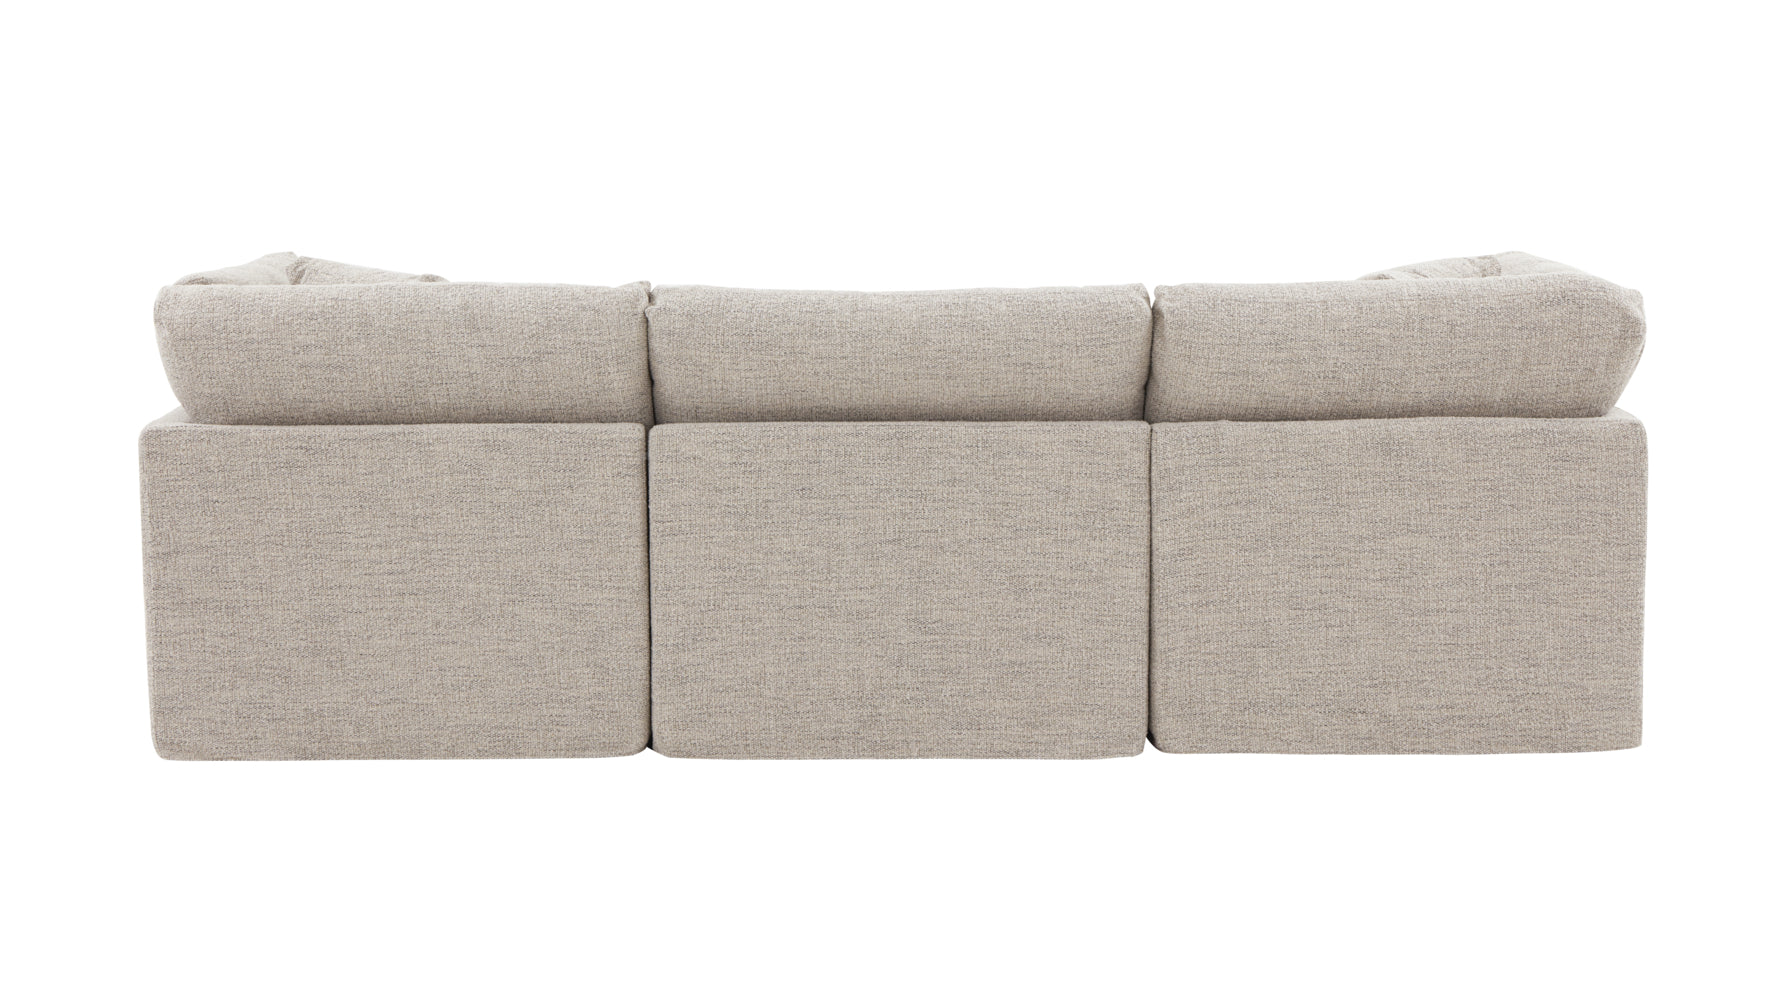 Get Together™ 3-Piece Modular Sofa, Standard, Oatmeal - Image 6